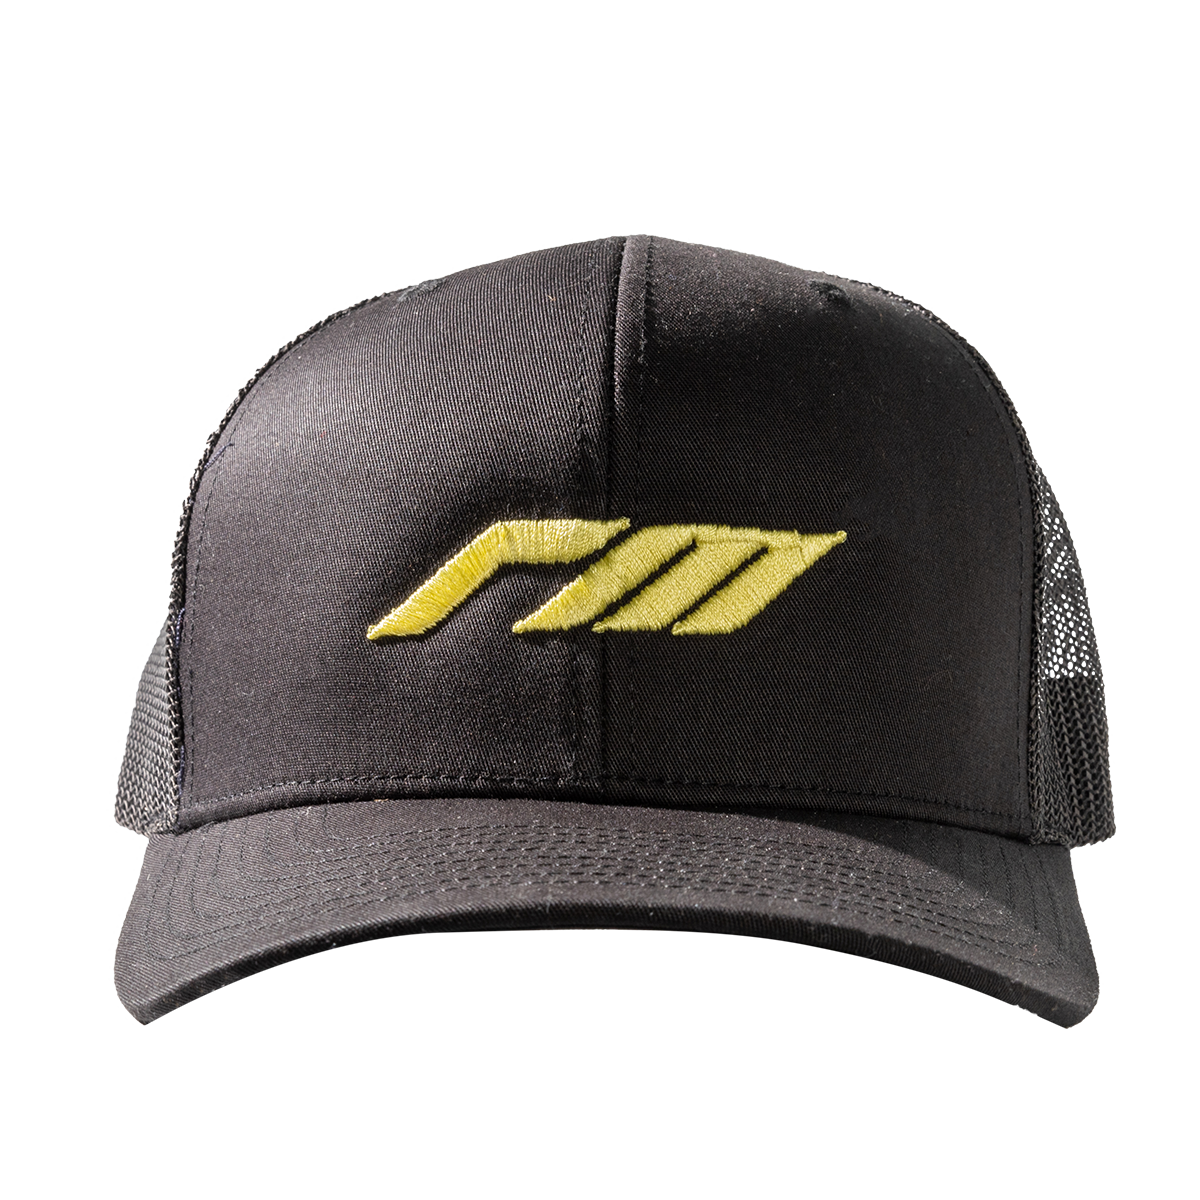 Product: Rost Martin Mesh Snapback Trucker Hat – Black